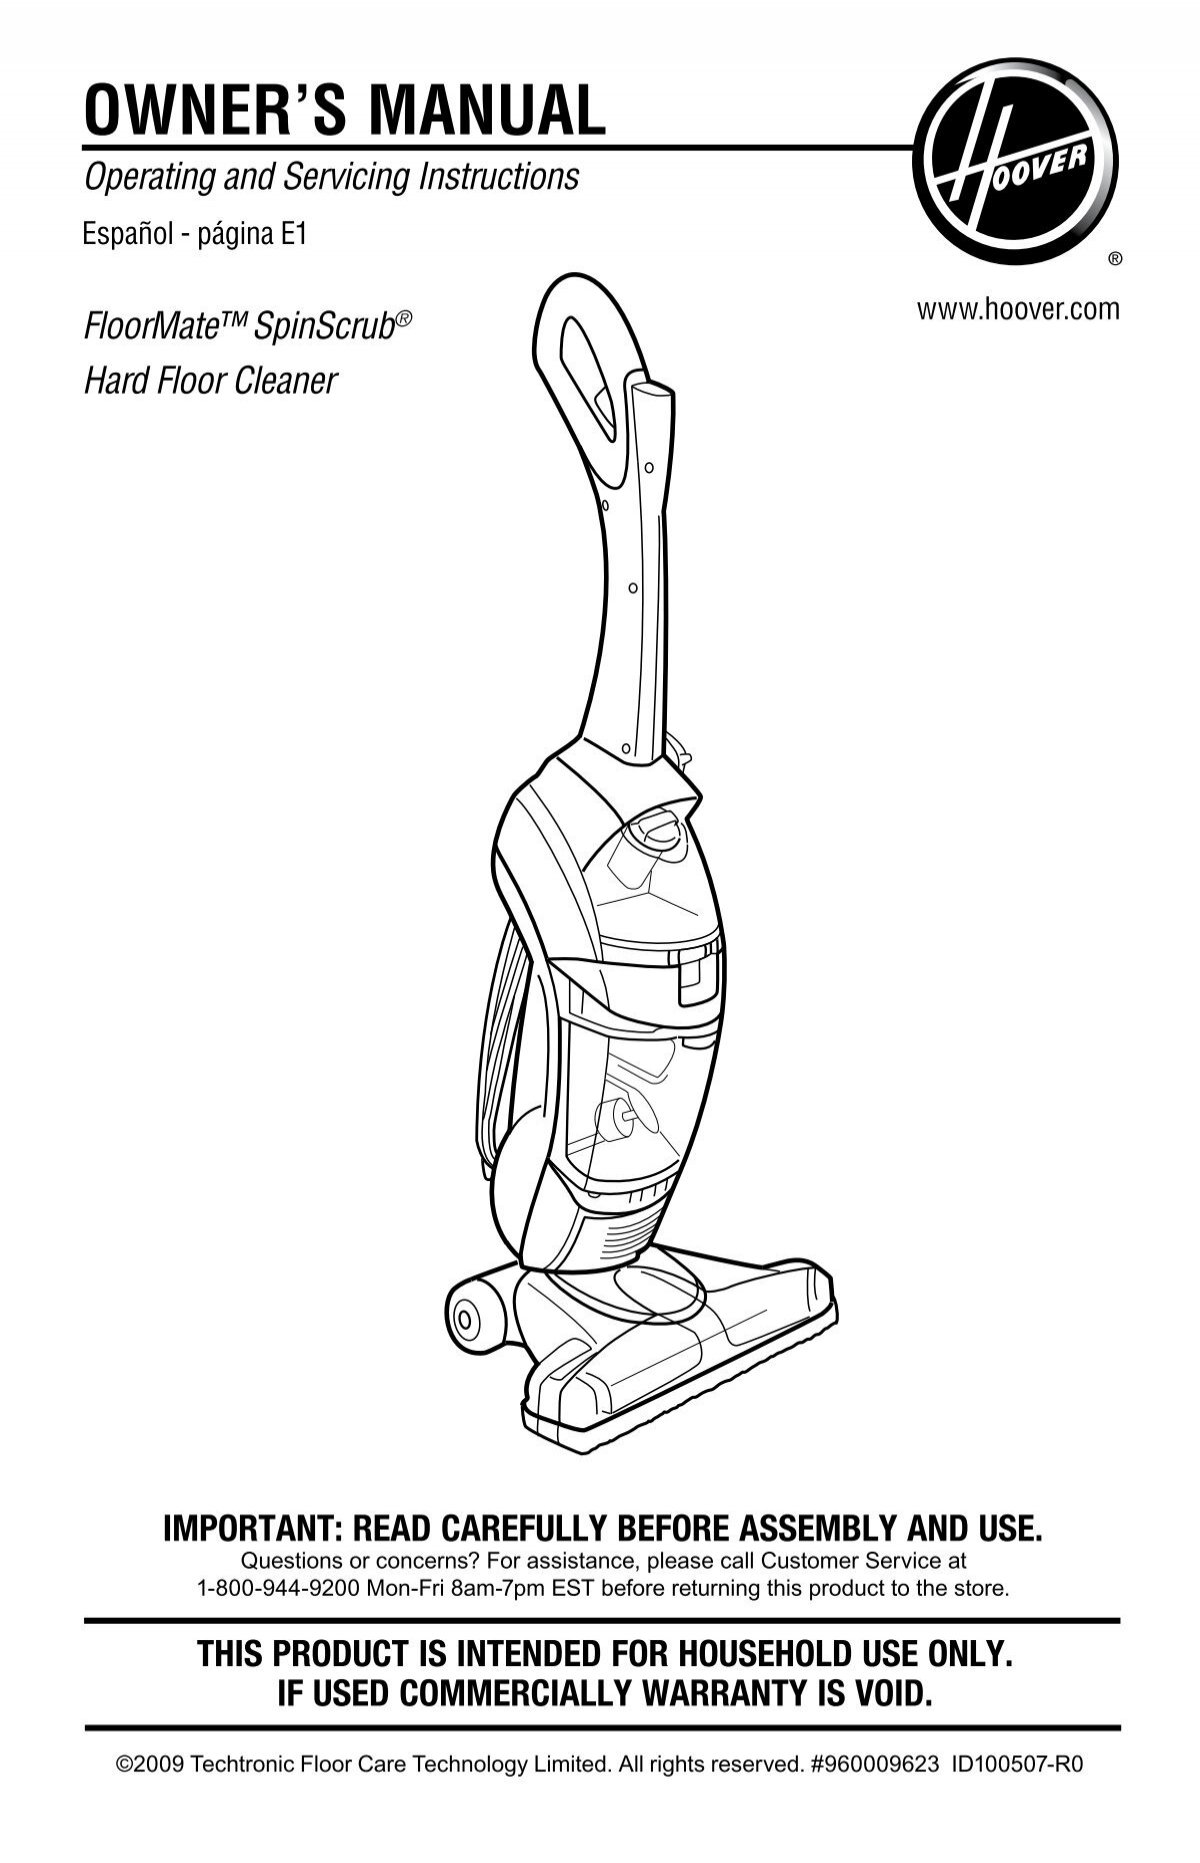 [Download 39+] Hoover Floormate Spinscrub Hard Floor Cleaner Manual